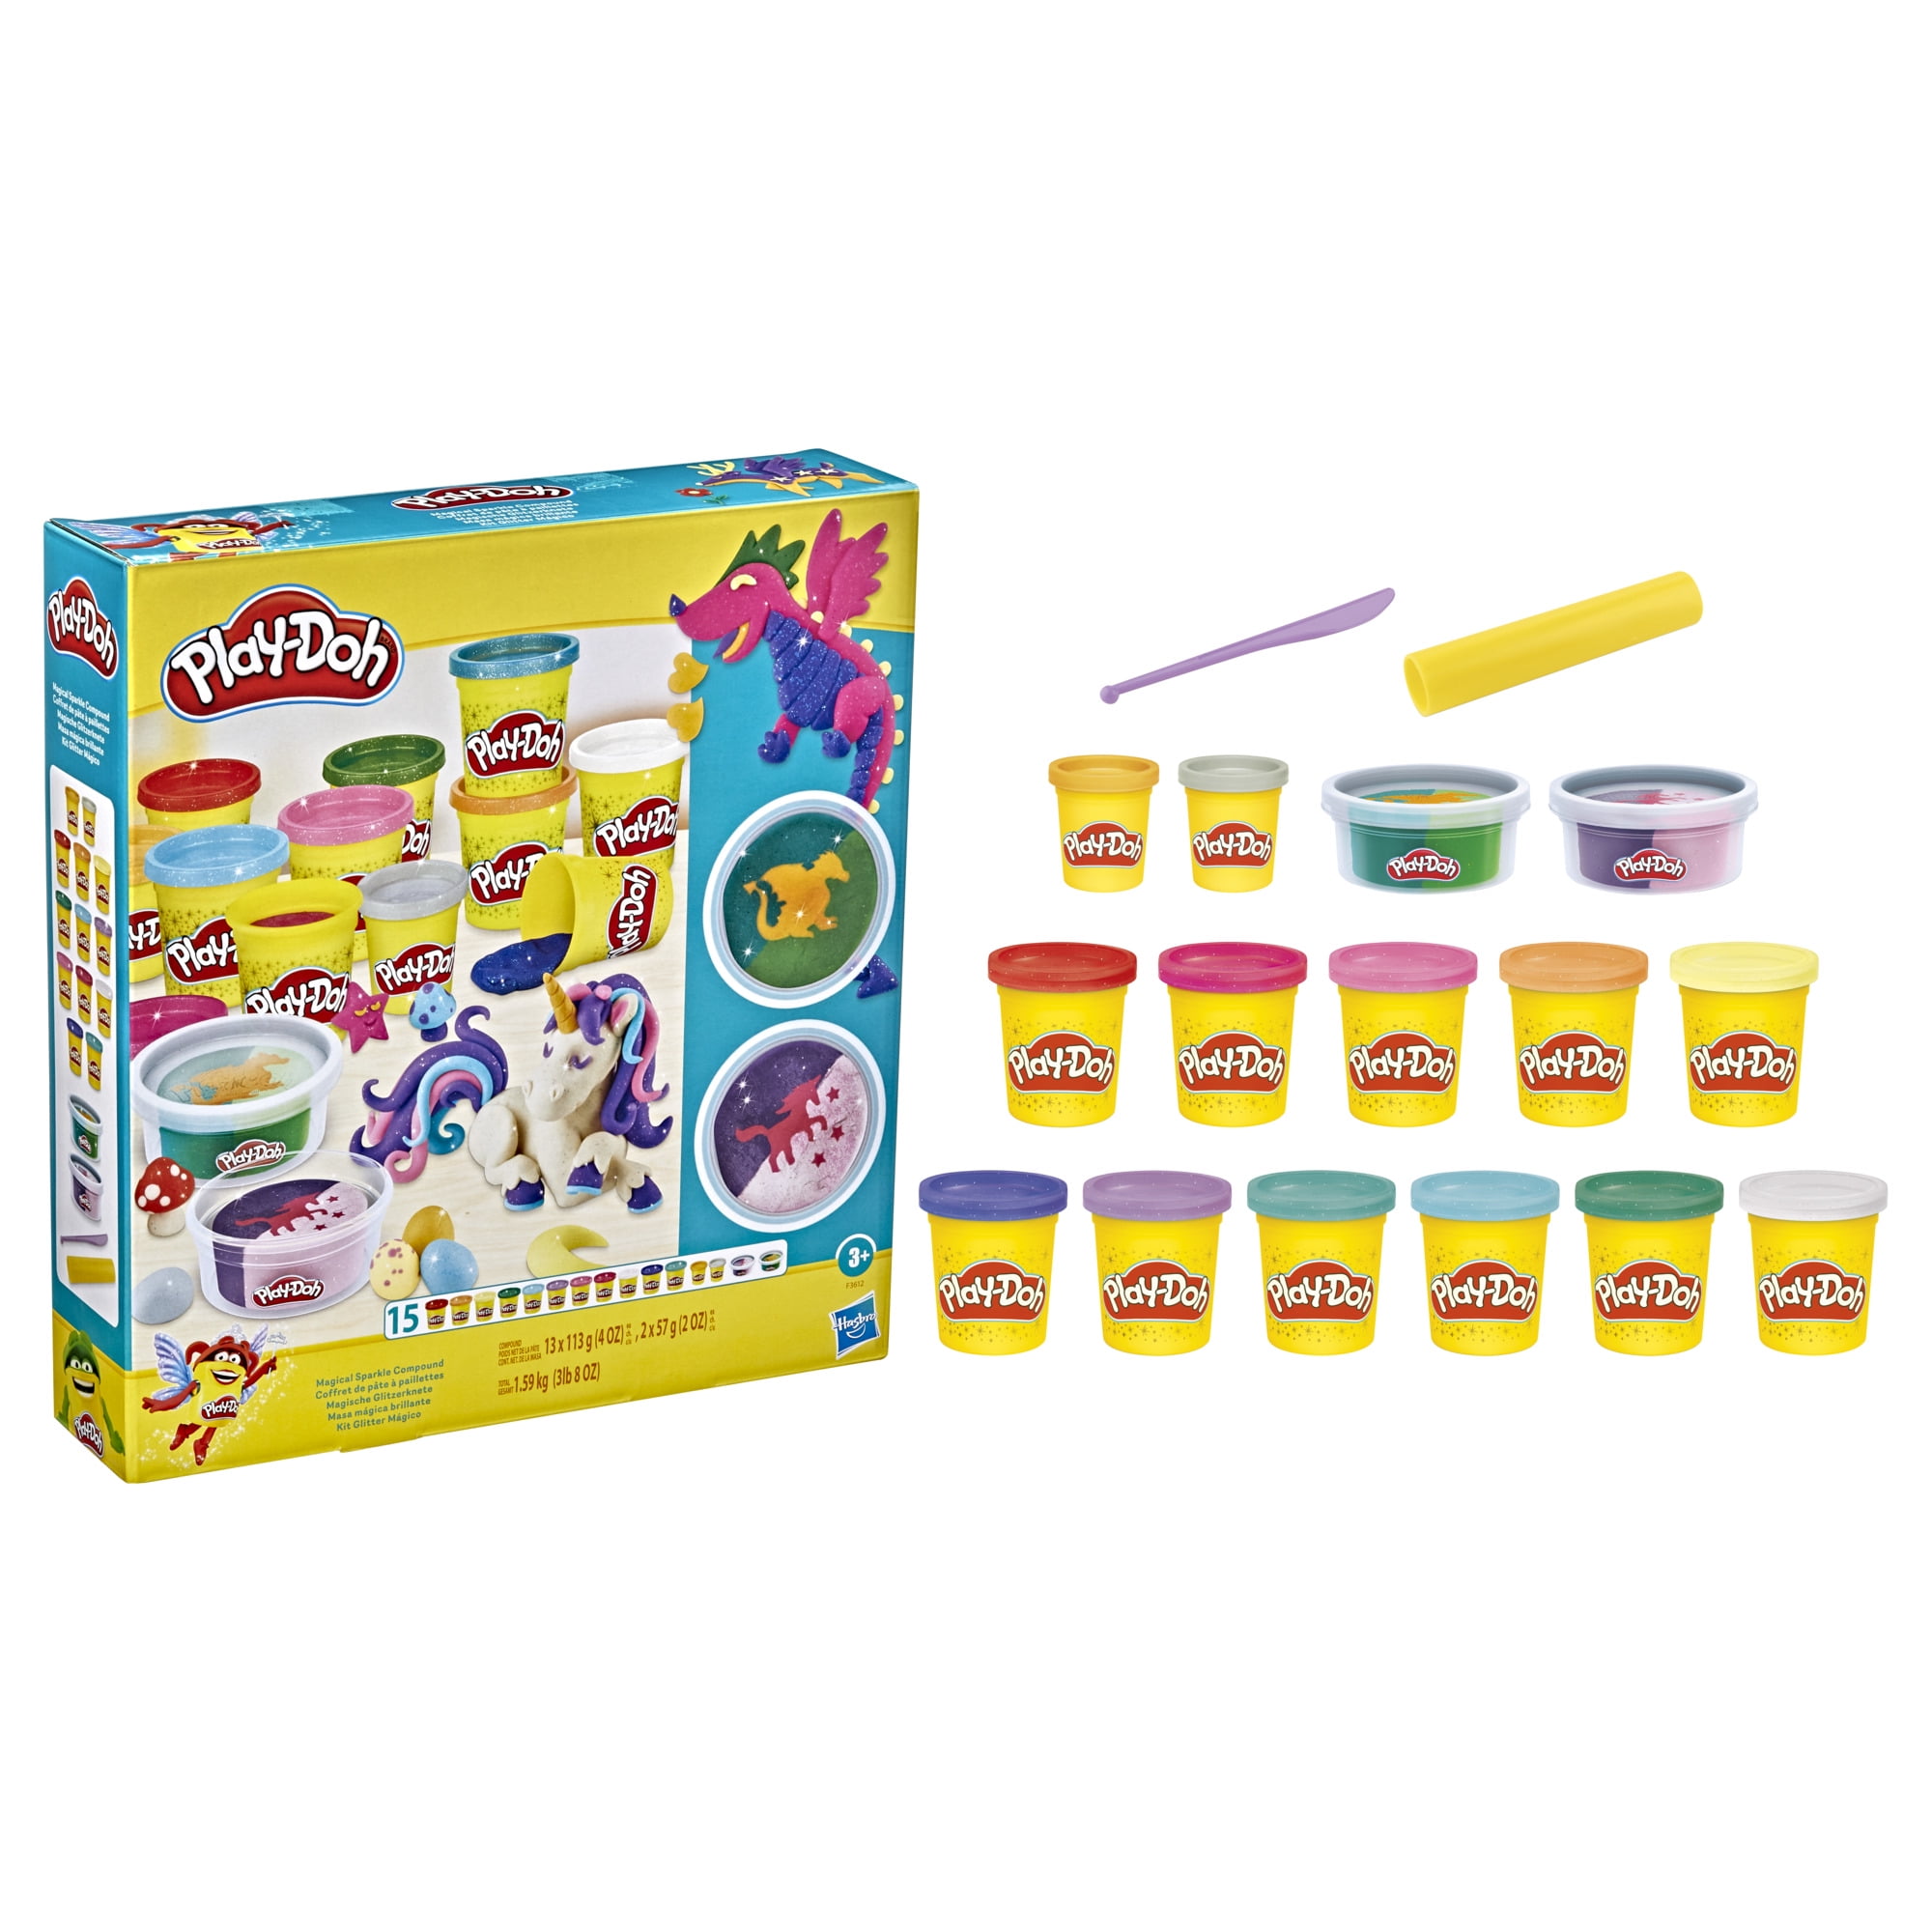 Play-Doh Bulk Unicorn Colors 13-Pack of Non-Toxic Modeling